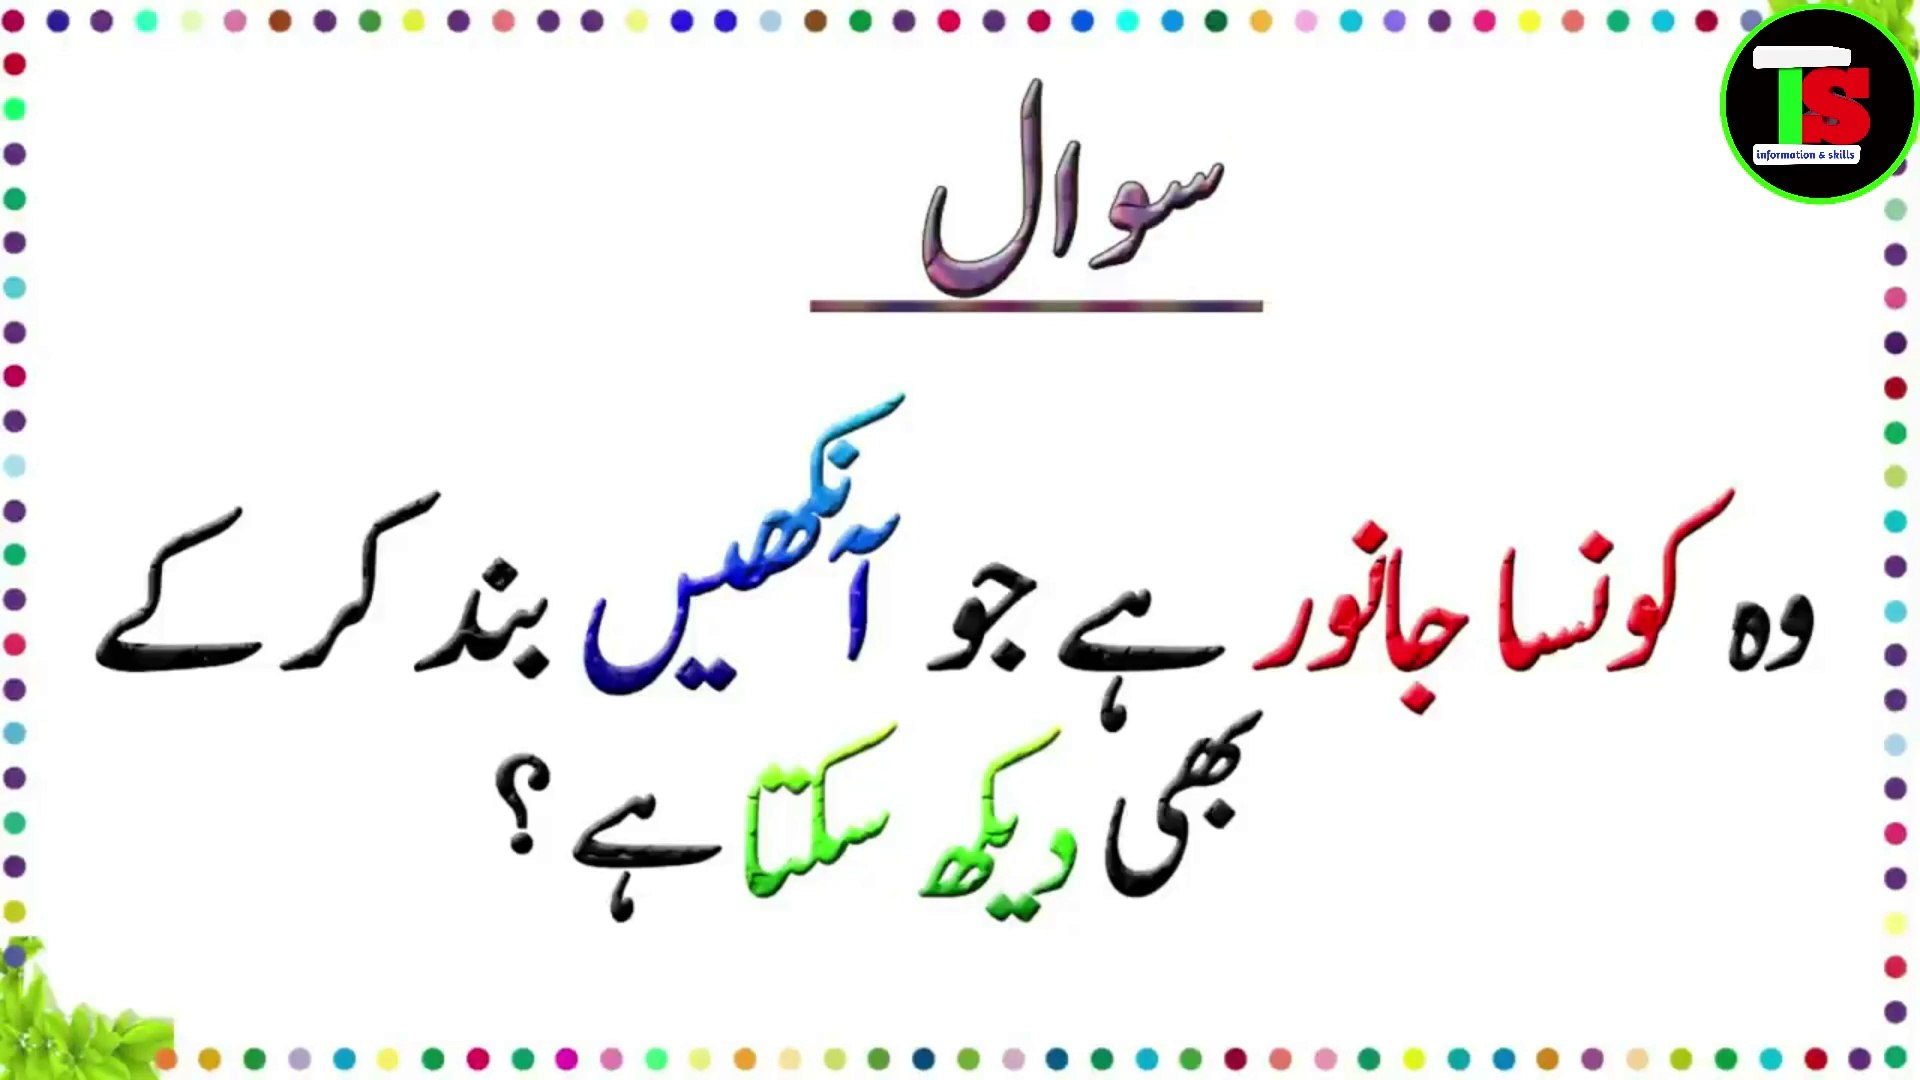 riddles in urdu with answers - urdu paheliyan with answer - paheliyan in  hindi with answer - video Dailymotion